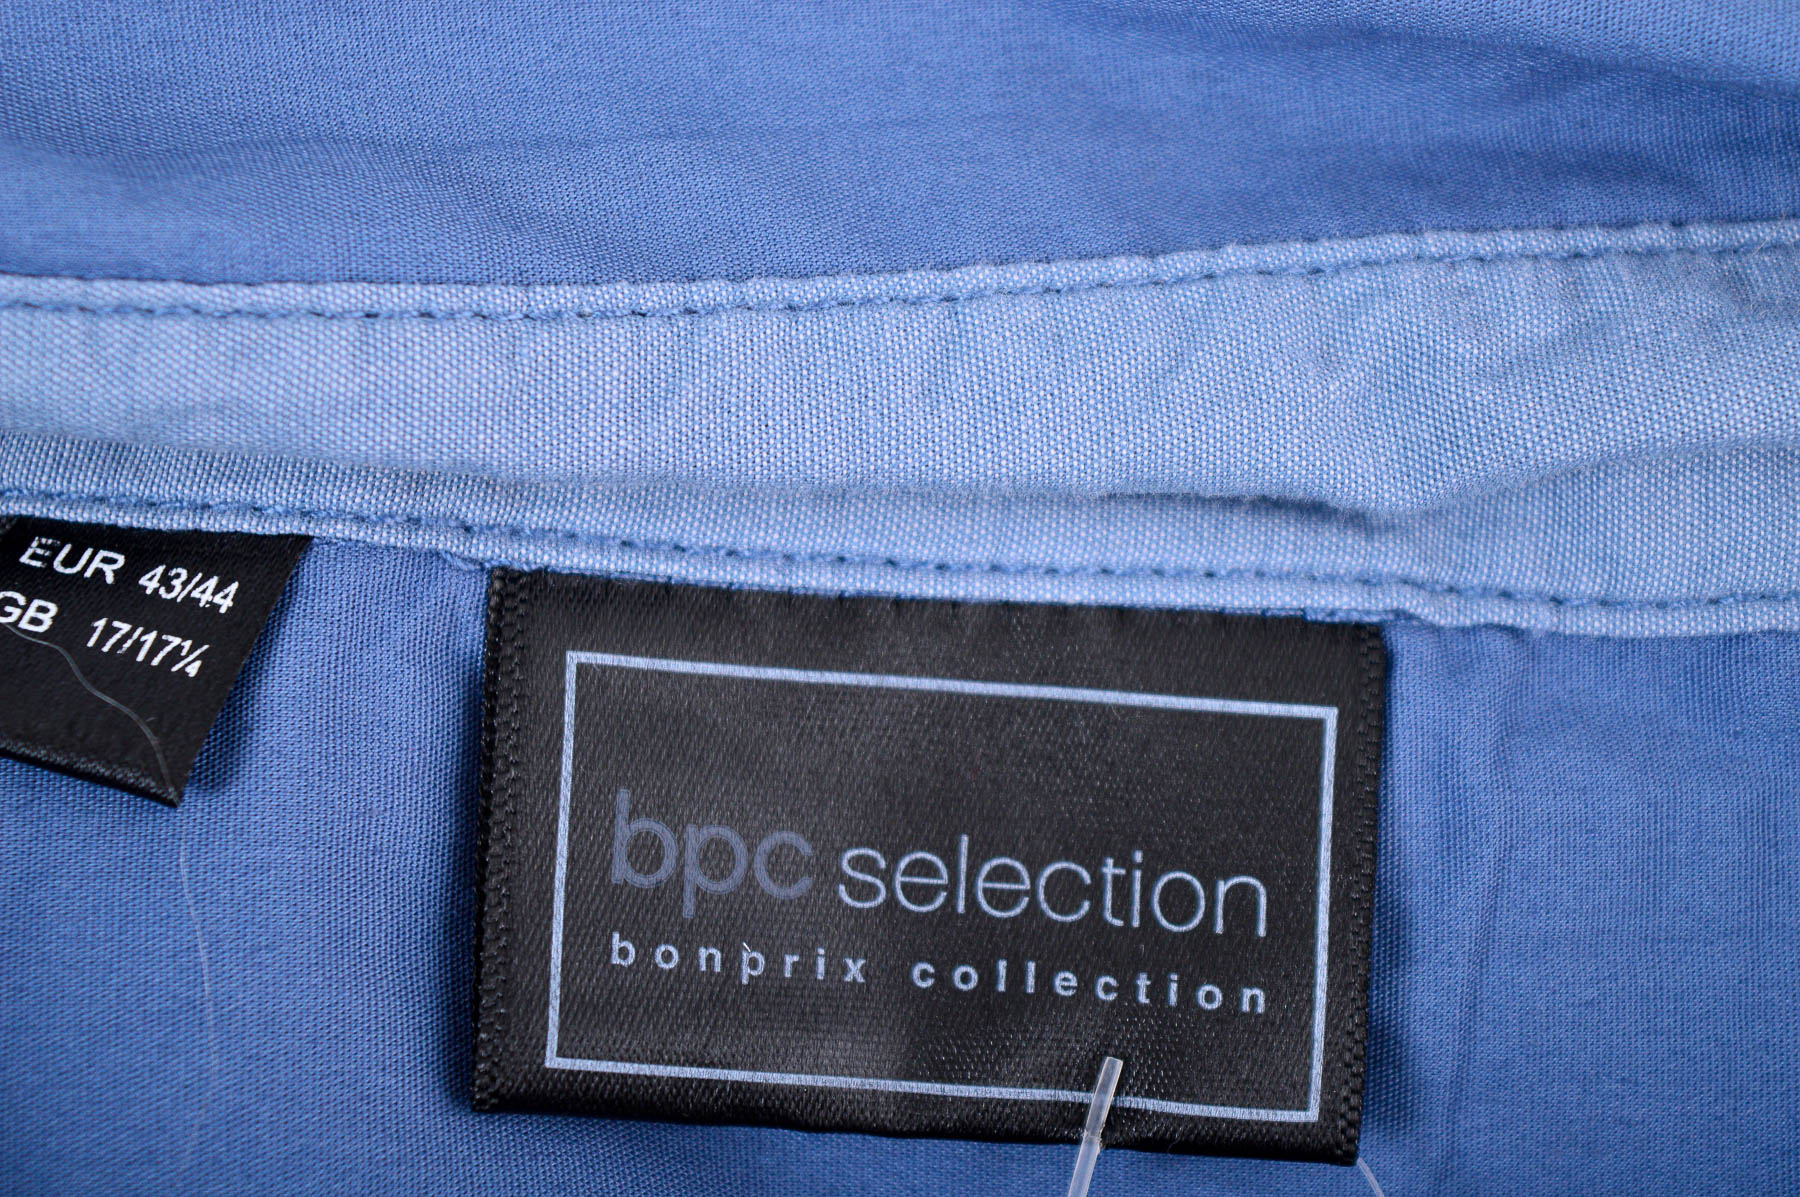 Męska koszula - Bpc selection bonprix collection - 2